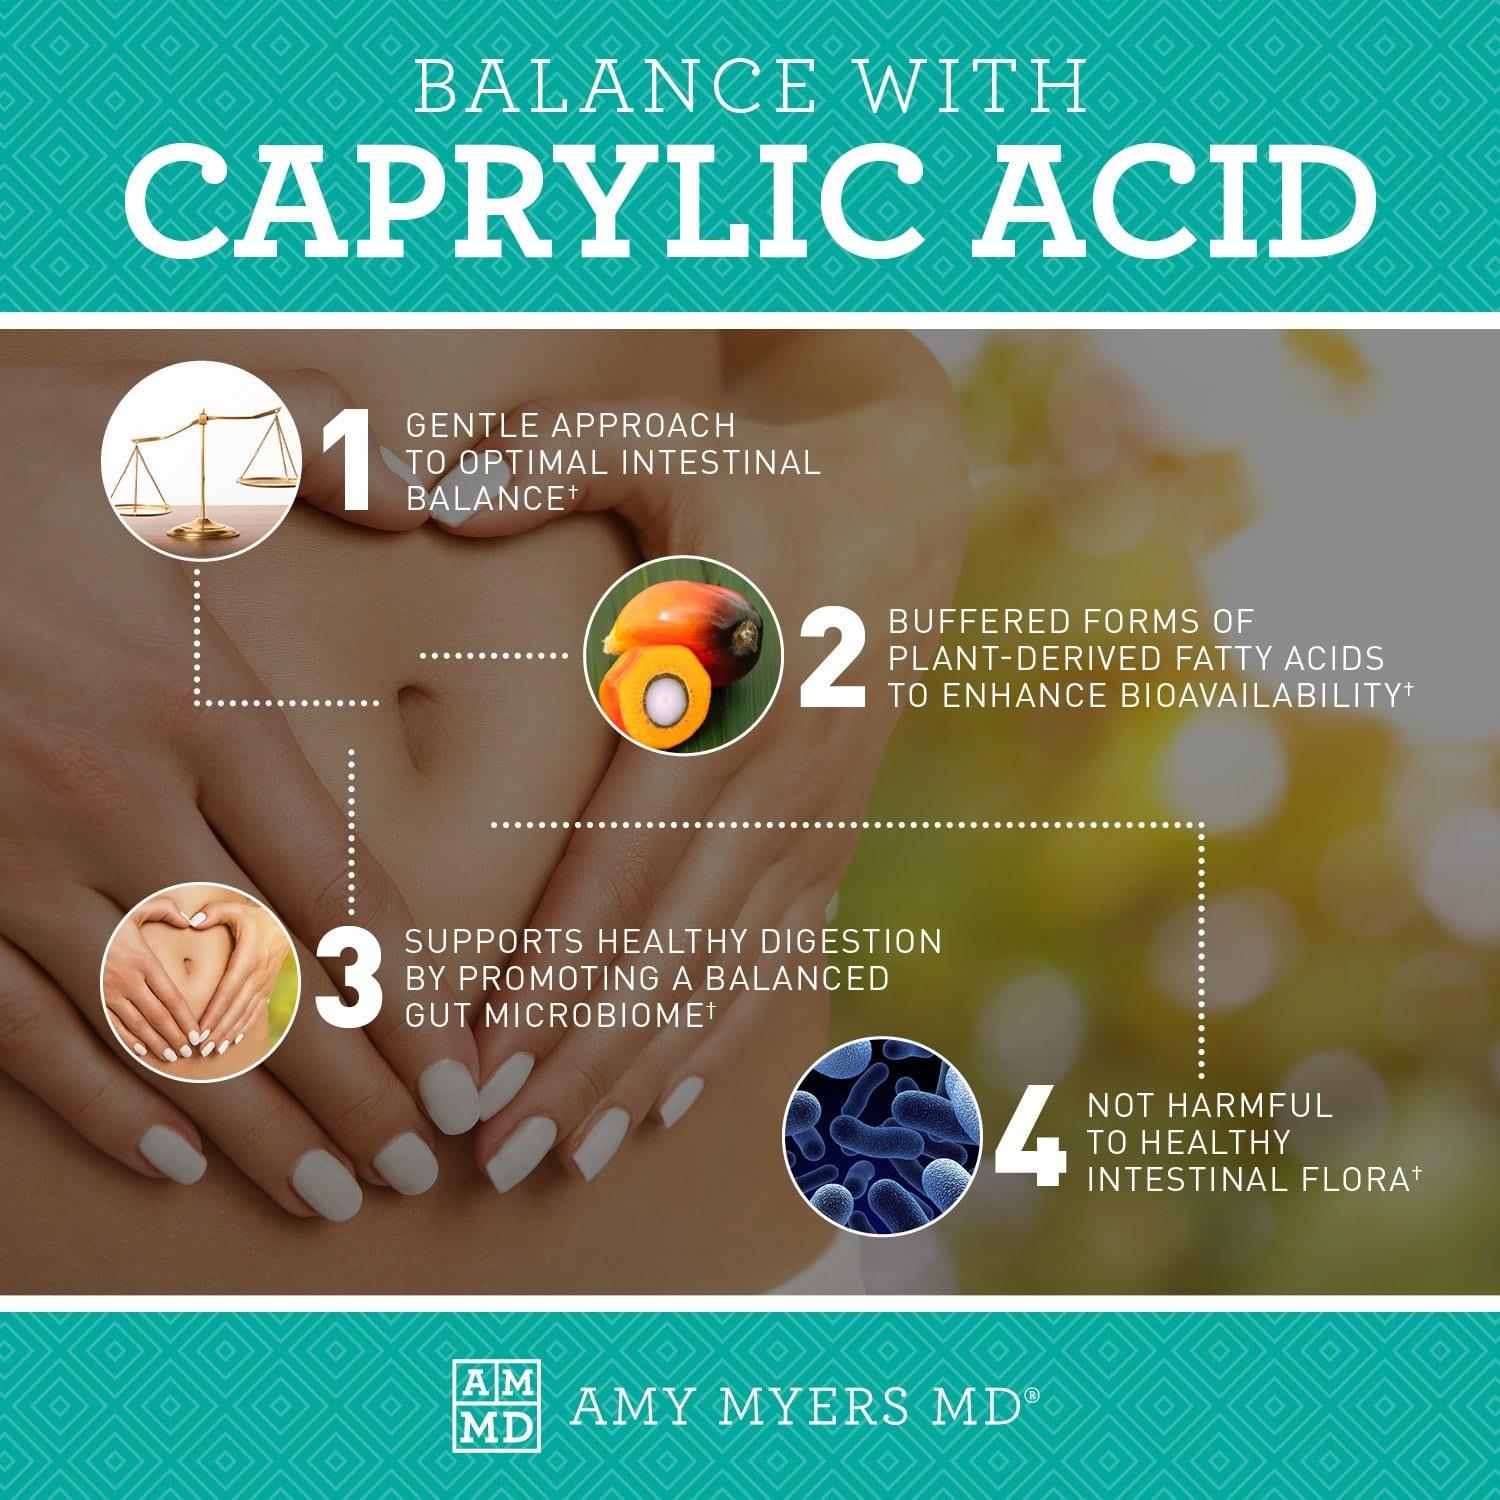 4 ways to Balance with Caprylic Acid - Amy Myers MD®